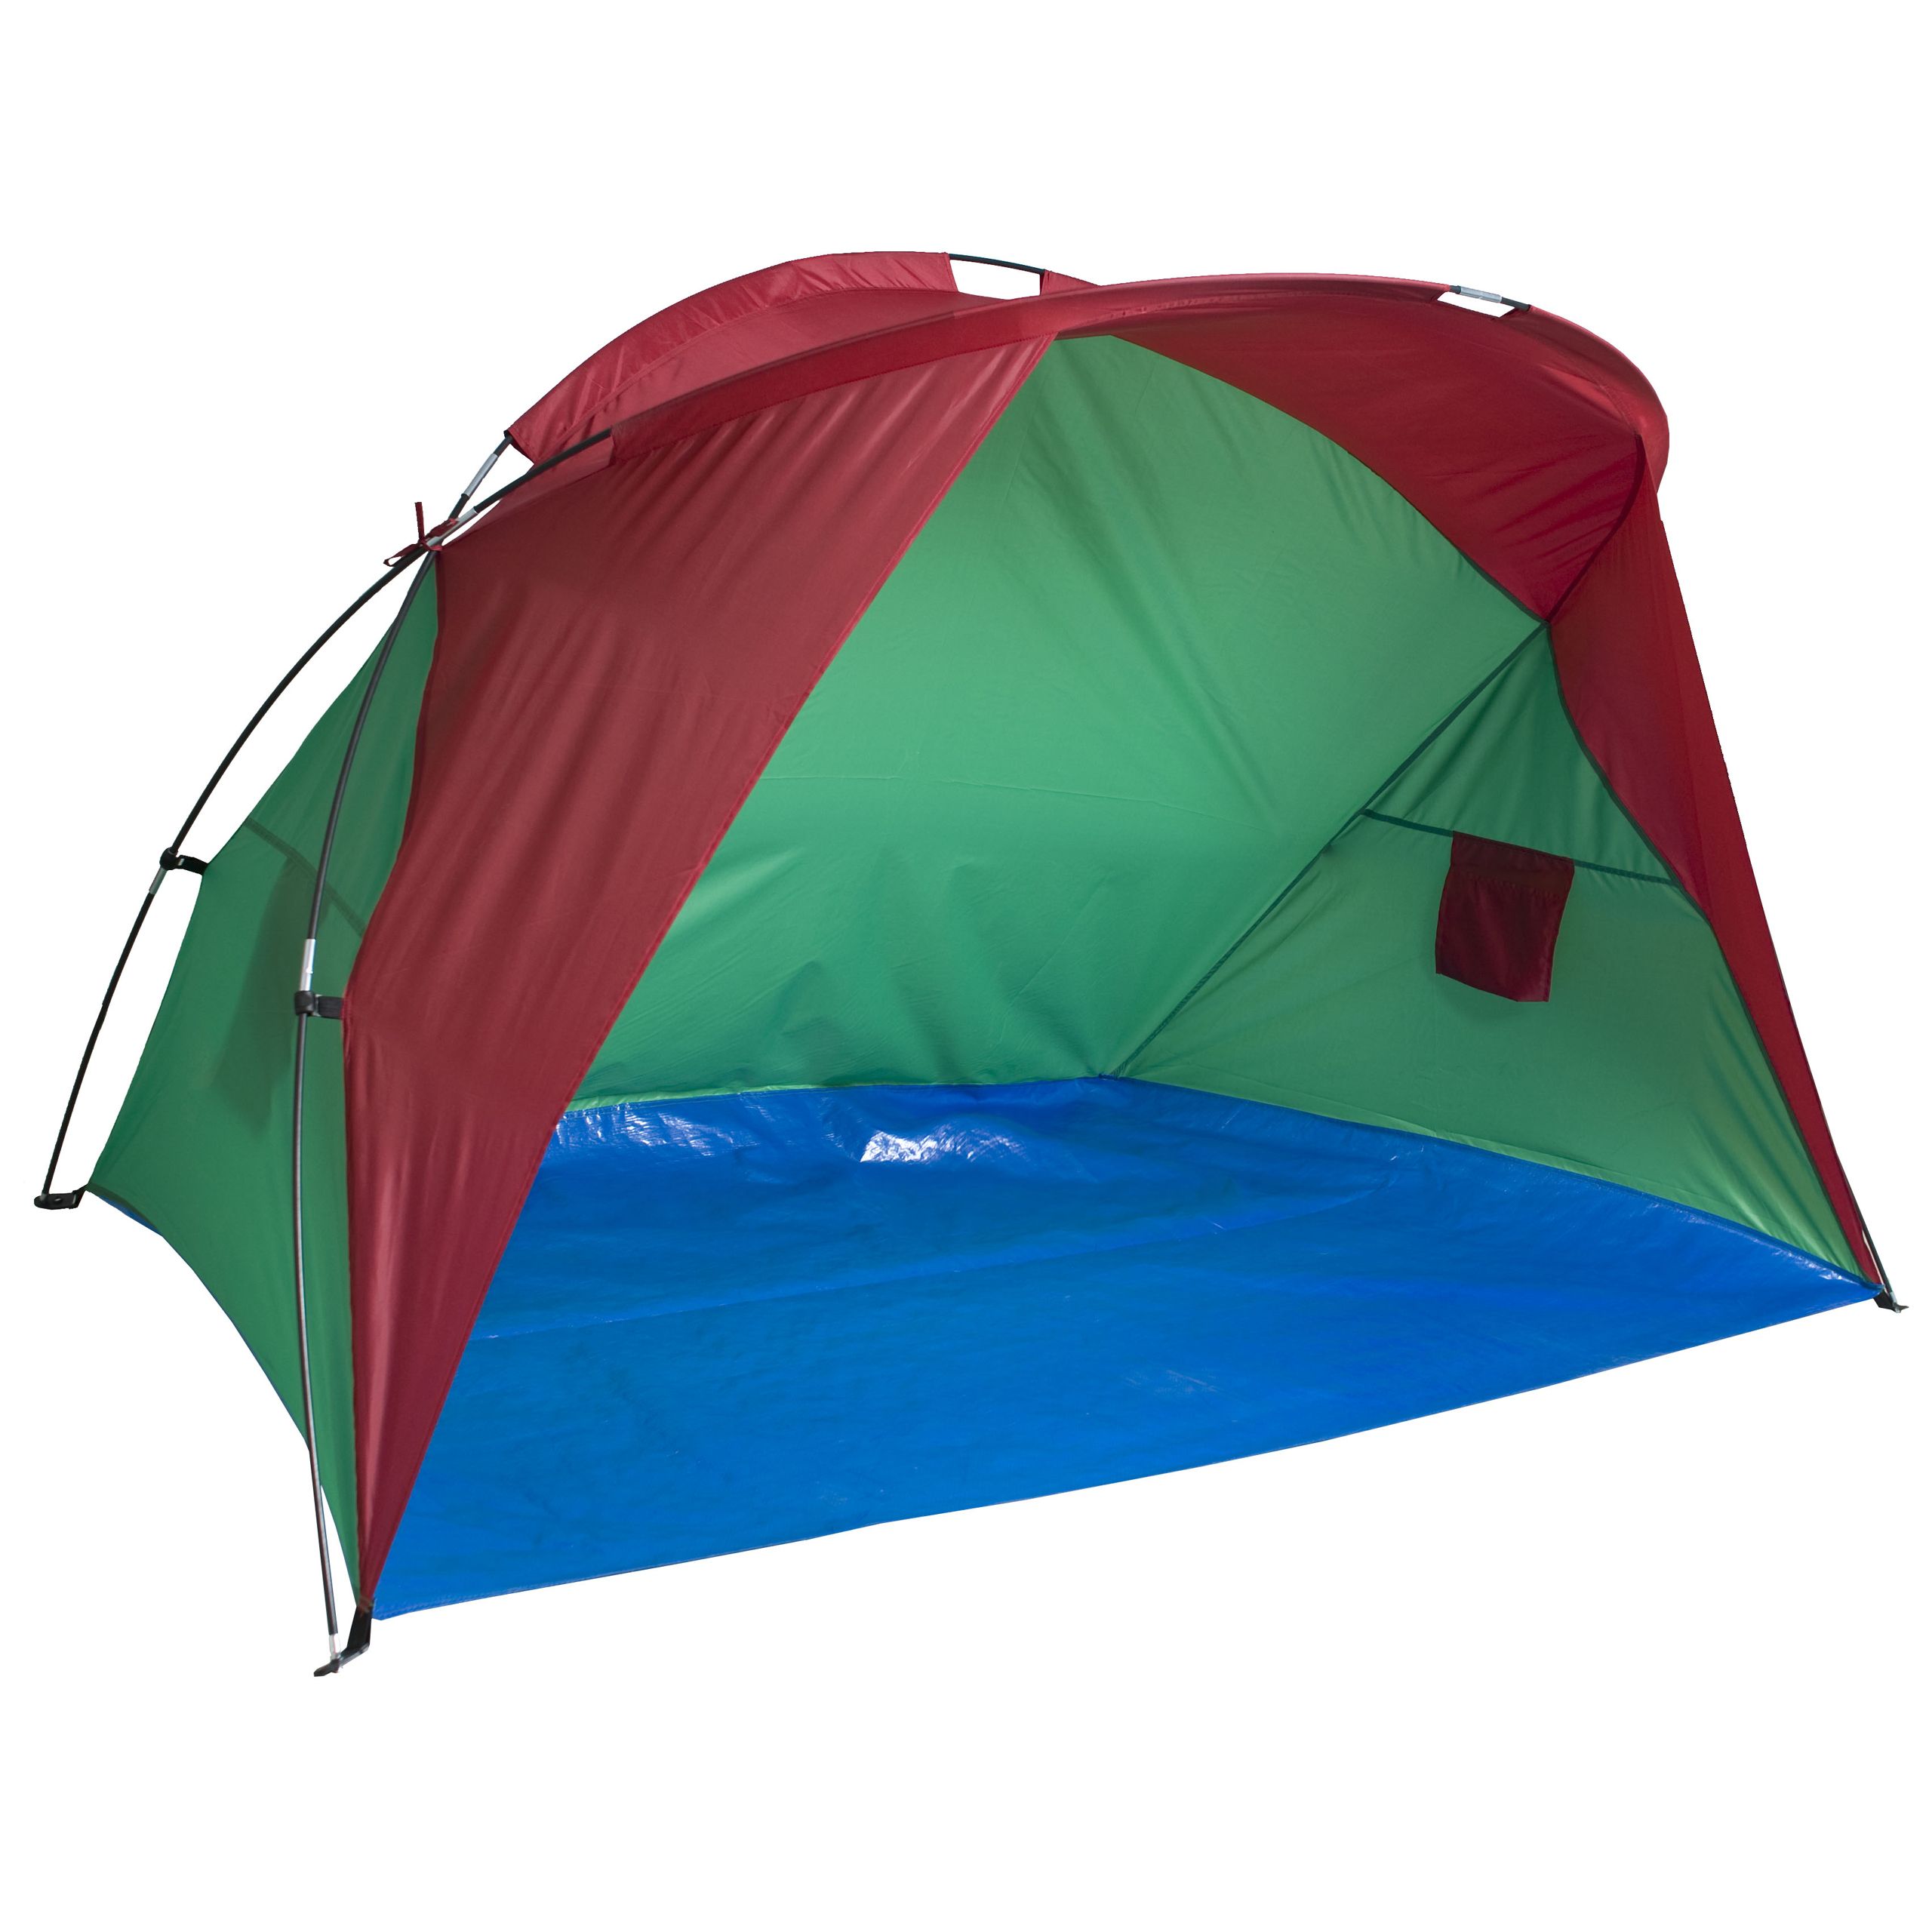 Lunan Easy Build Upf GardenandBeach Tent 2.4m X 1.25m